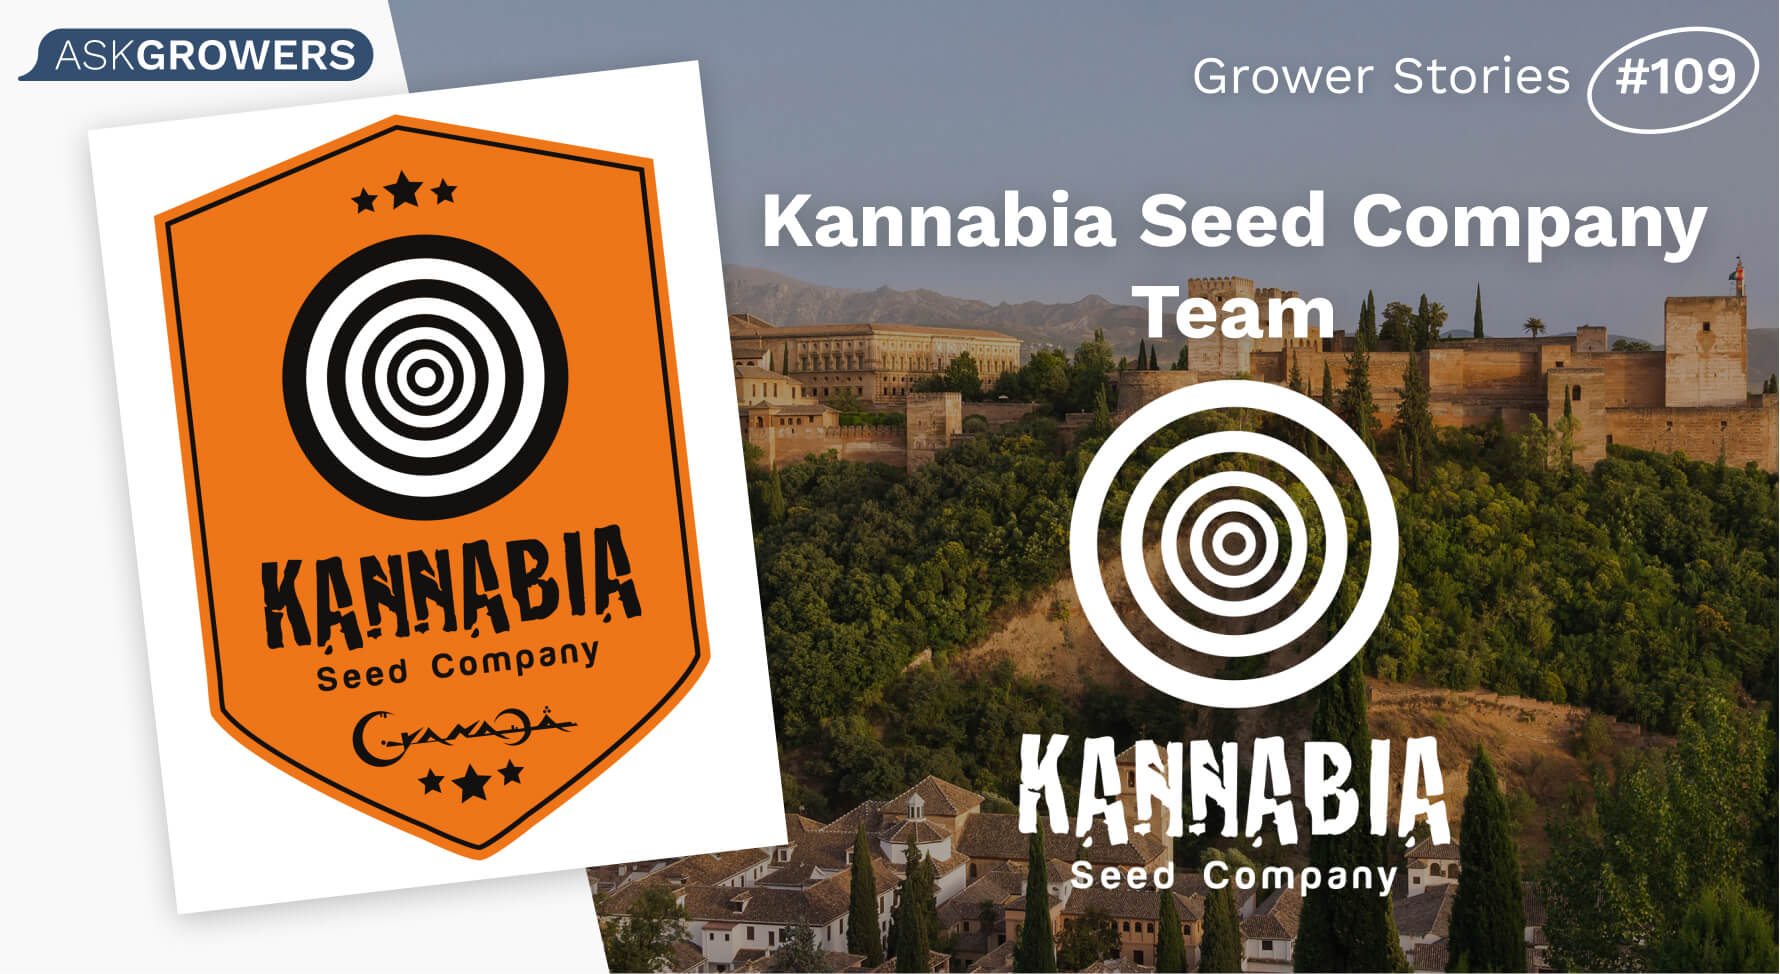 Grower Stories #109: Kannabia Seeds Company Team